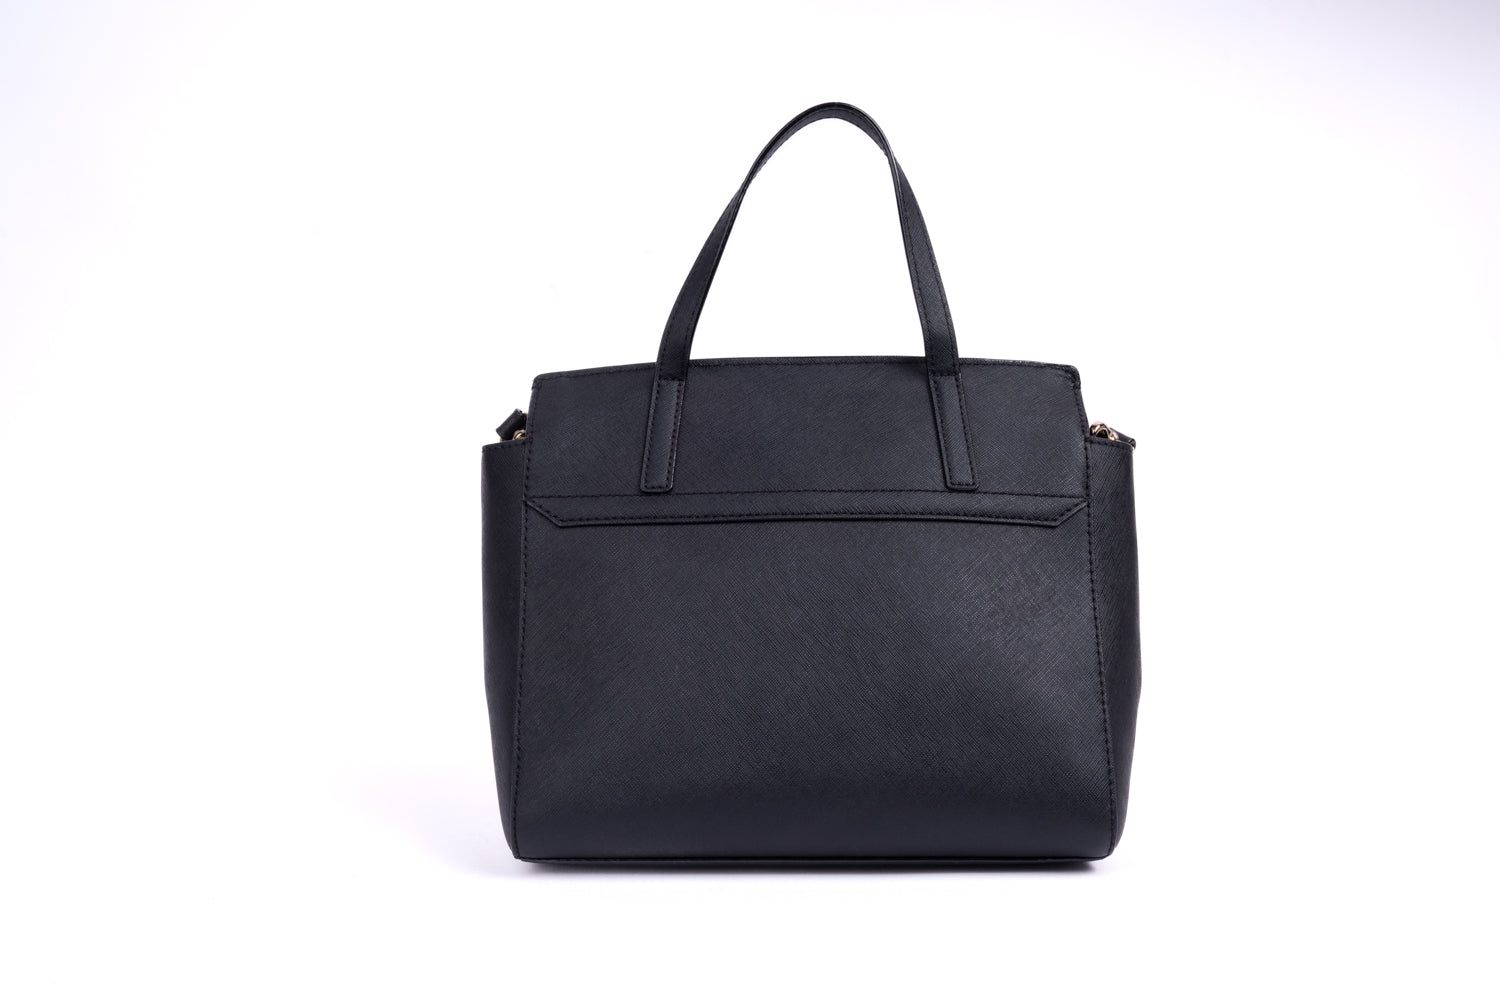 Kate Spade Black Leather Handle Bag